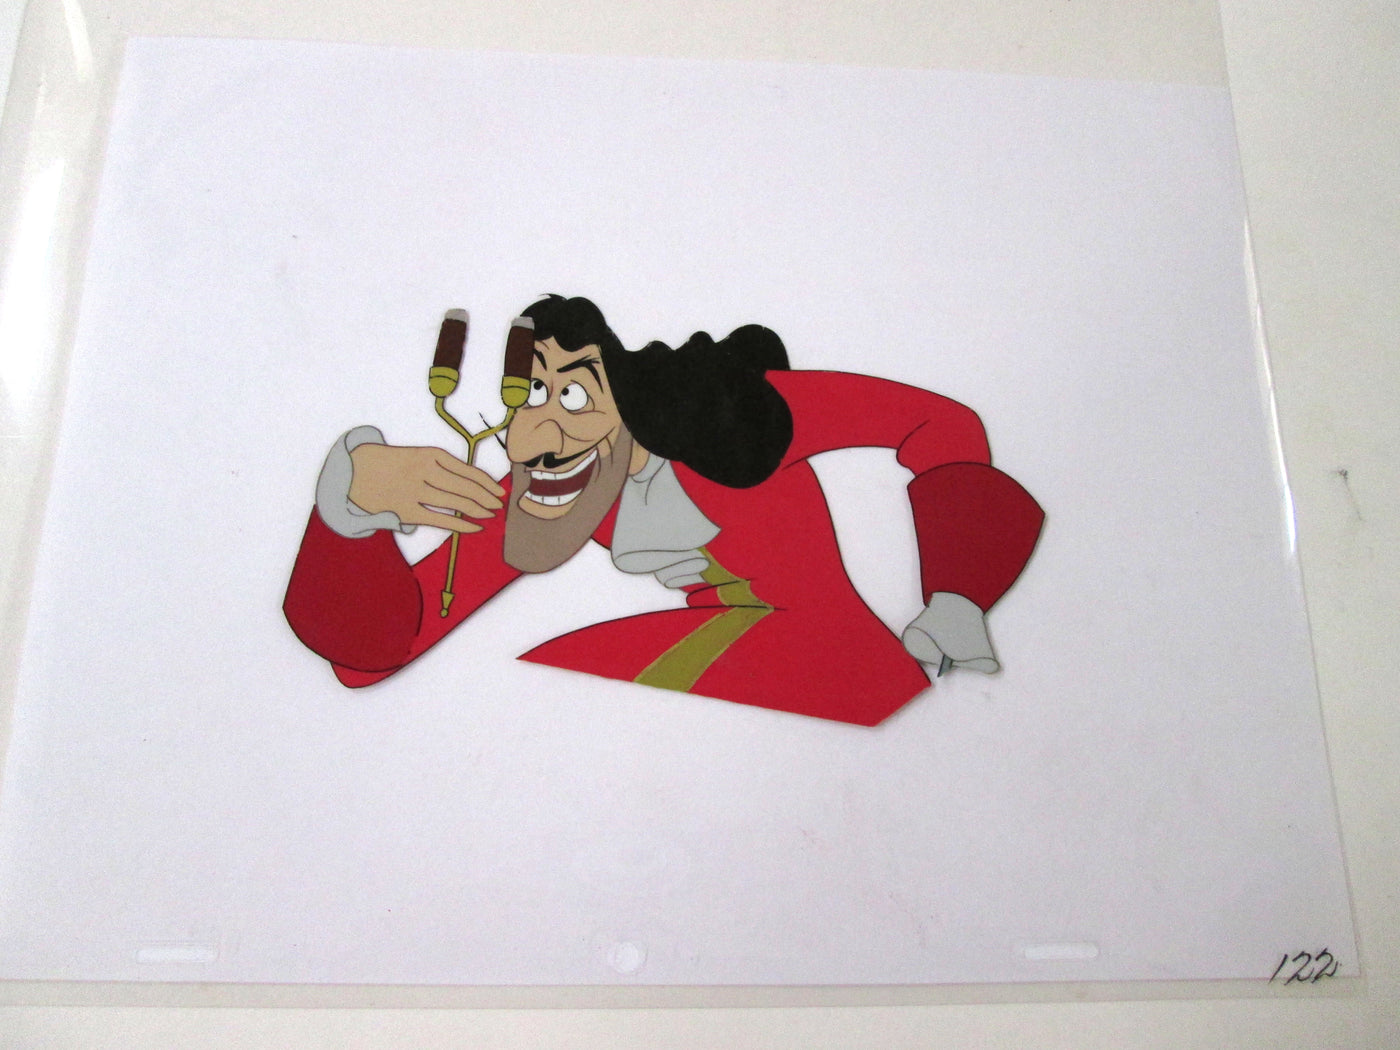 Original Disney Production Cel featuring Captain Hook from Peter Pan